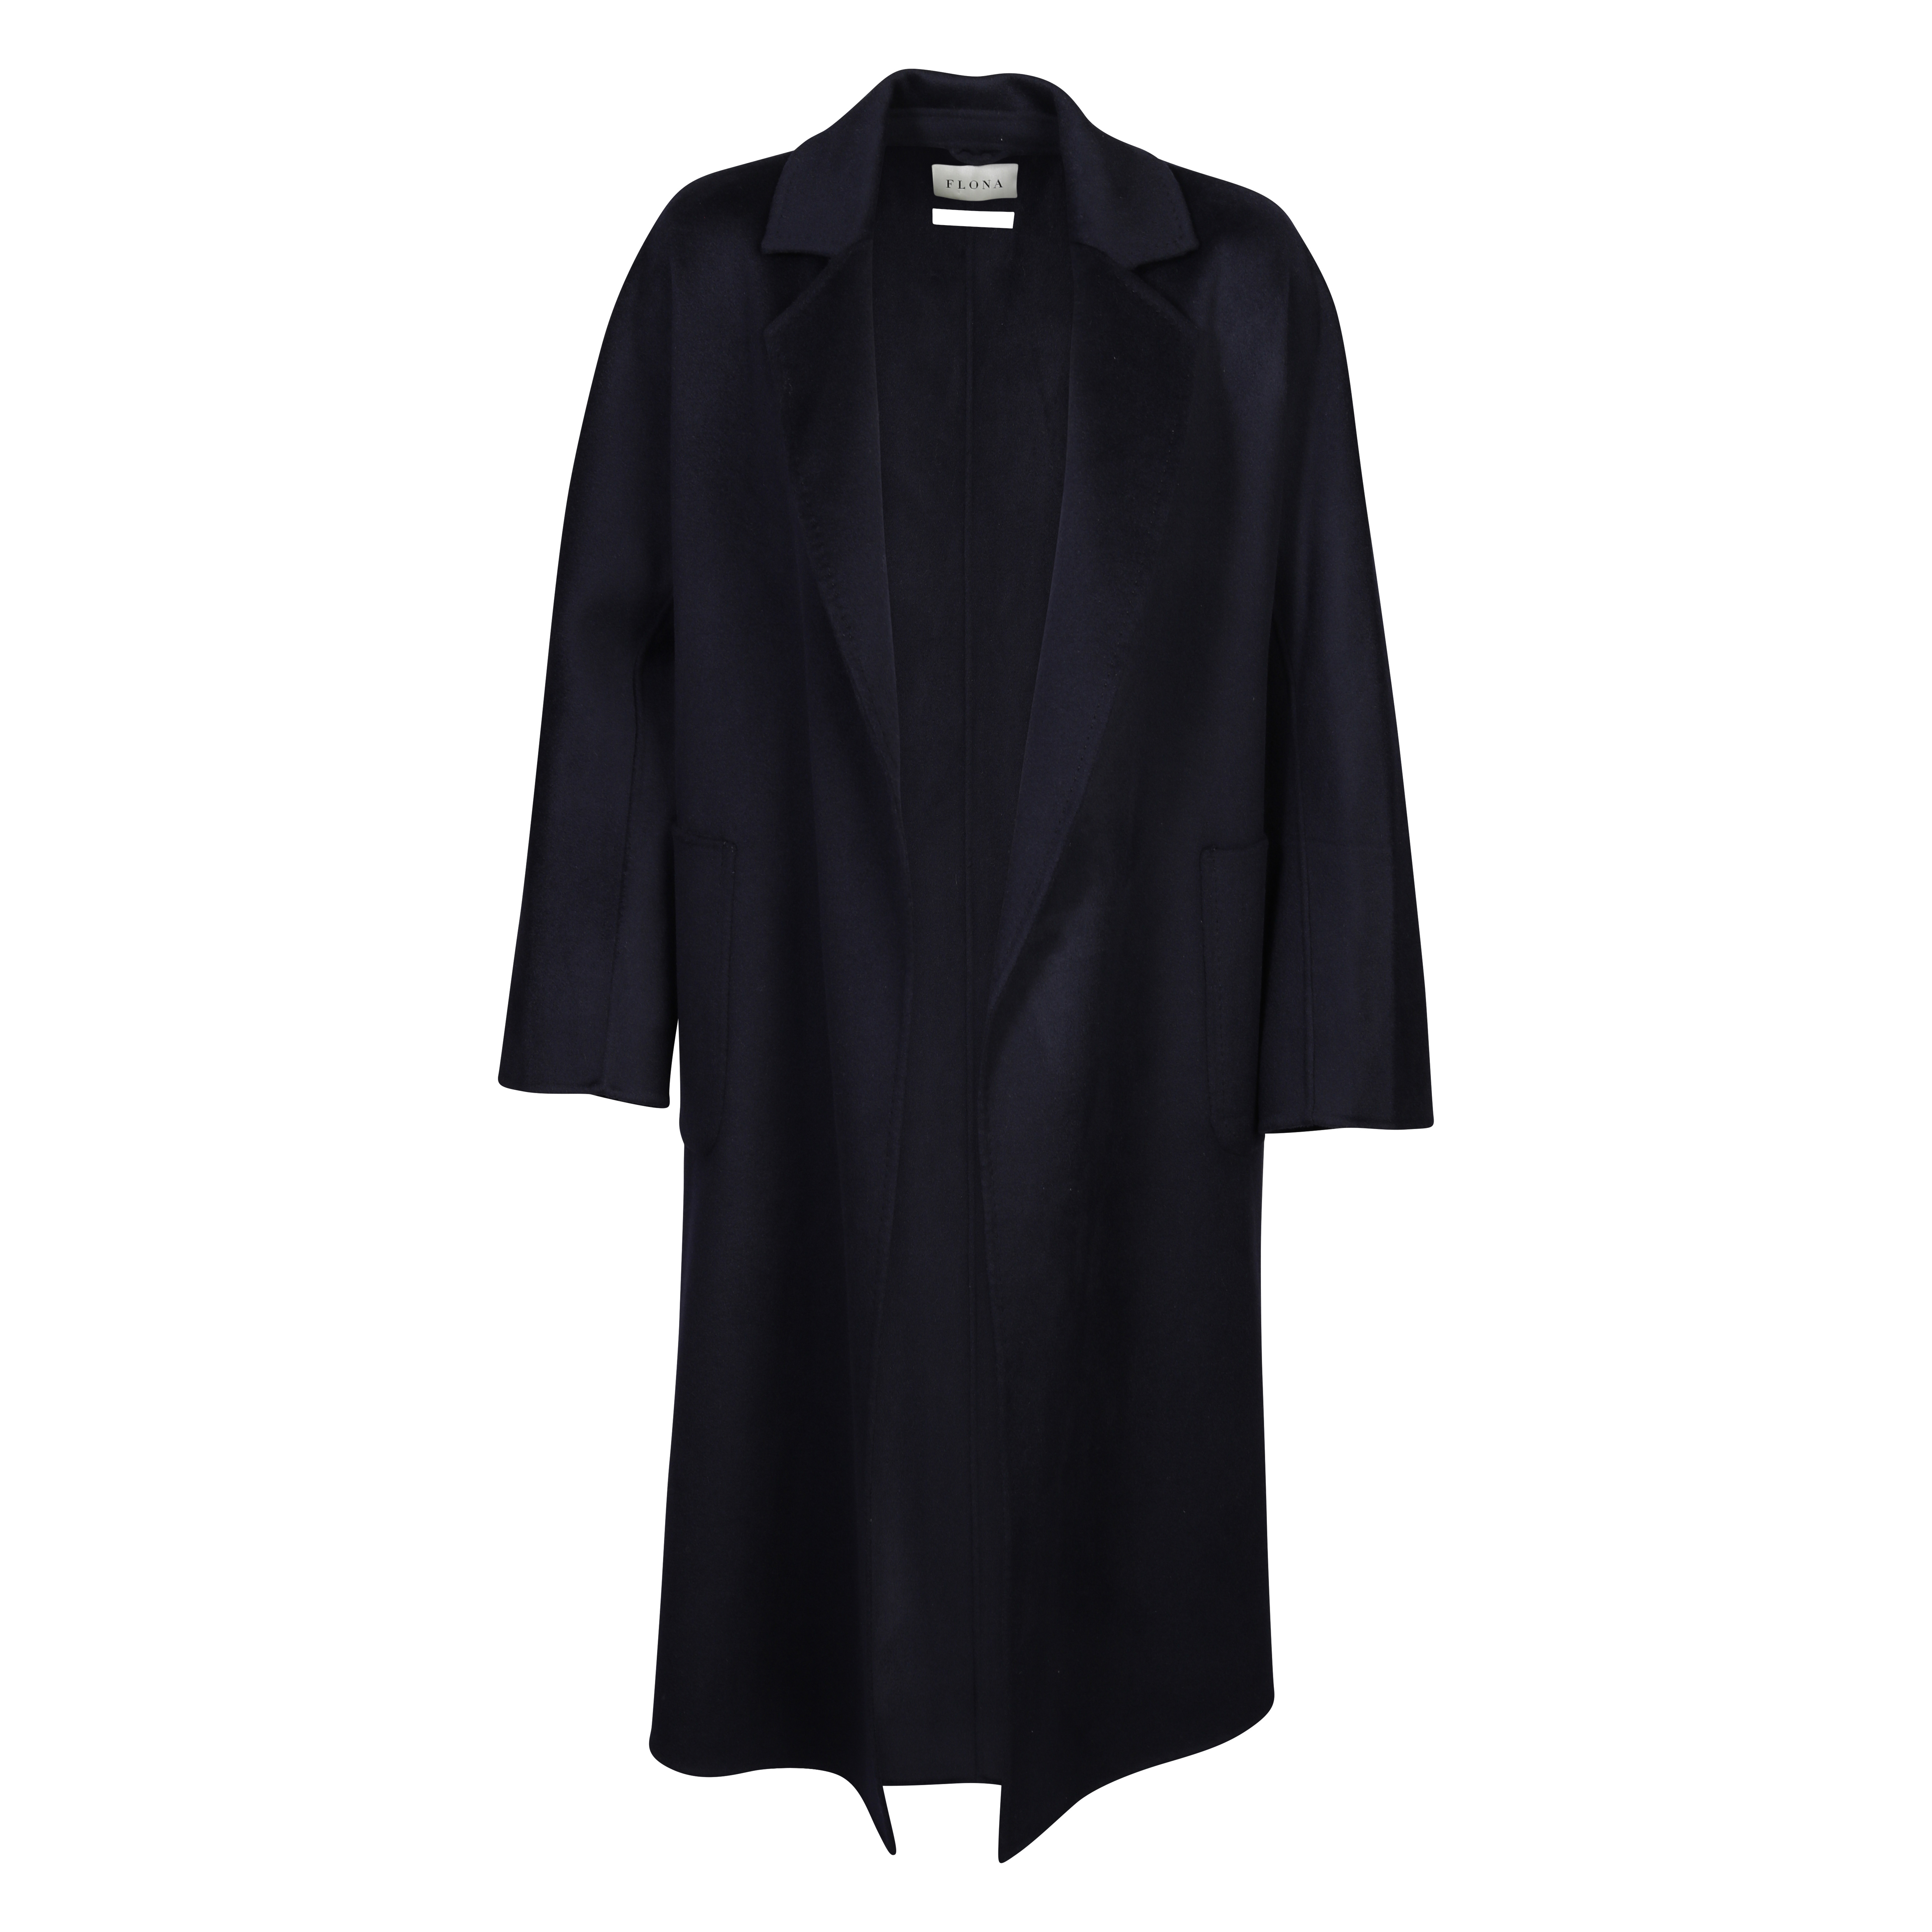 Flona Wool/Cashmere Coat in Navy XS/S